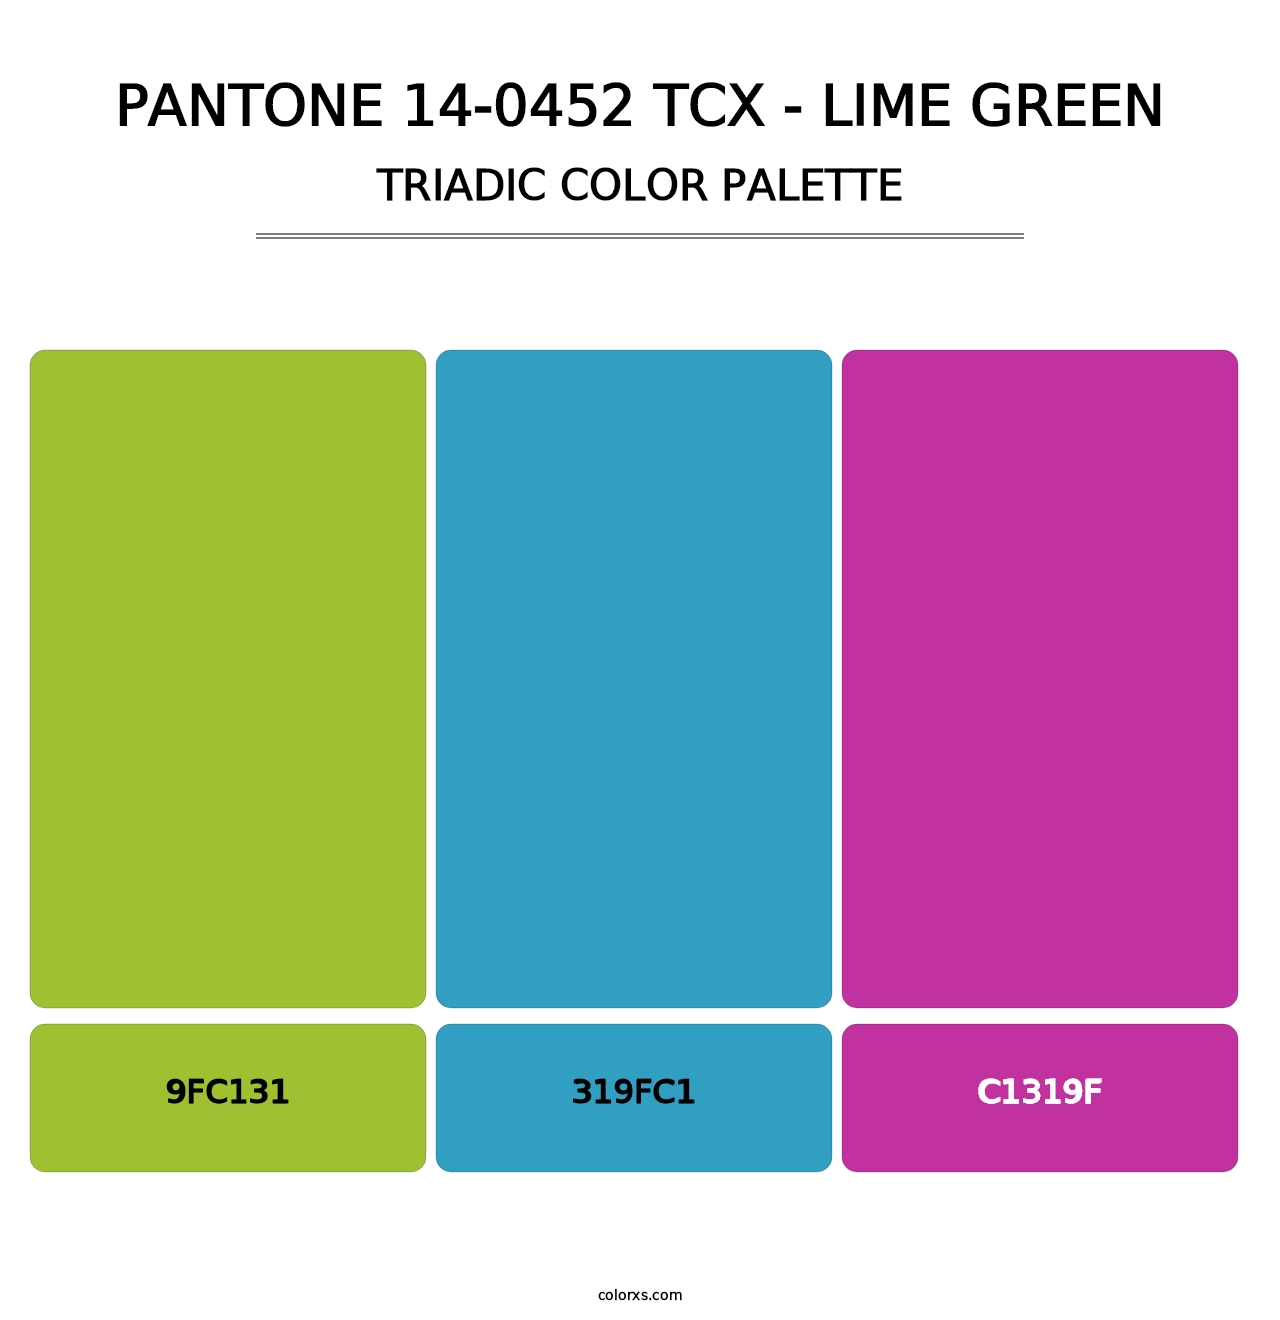 PANTONE 14-0452 TCX - Lime Green - Triadic Color Palette